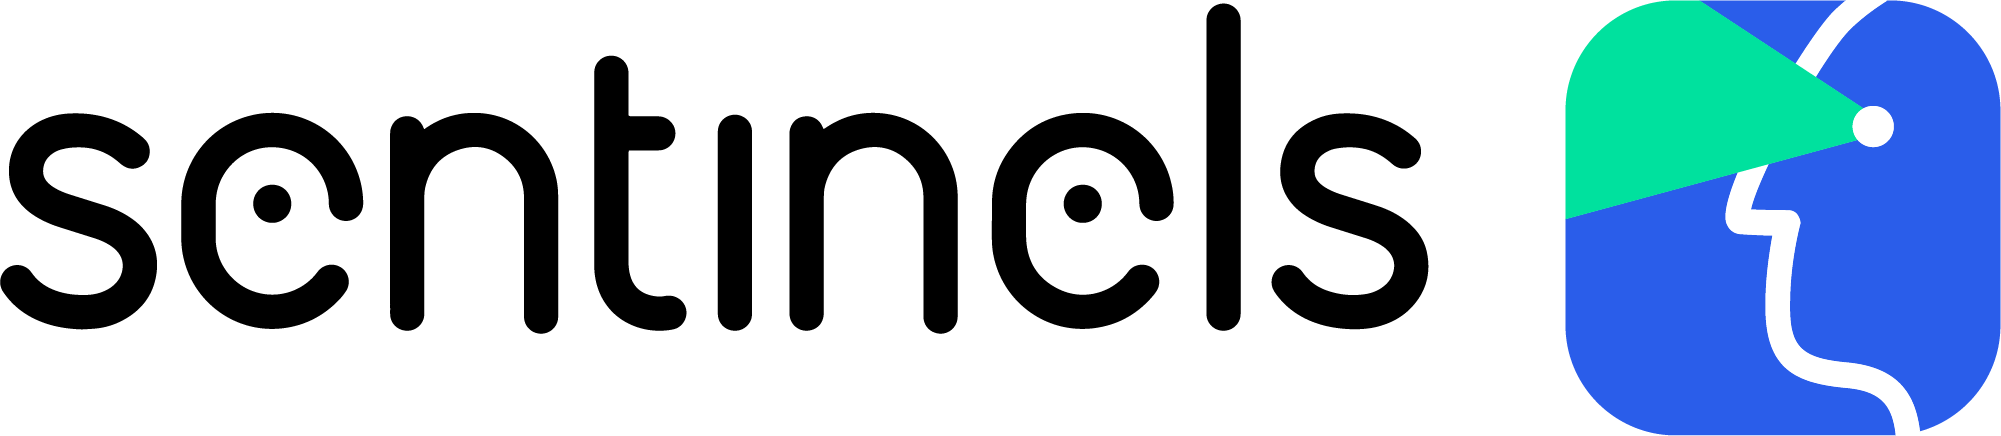 Sentinels logo - black